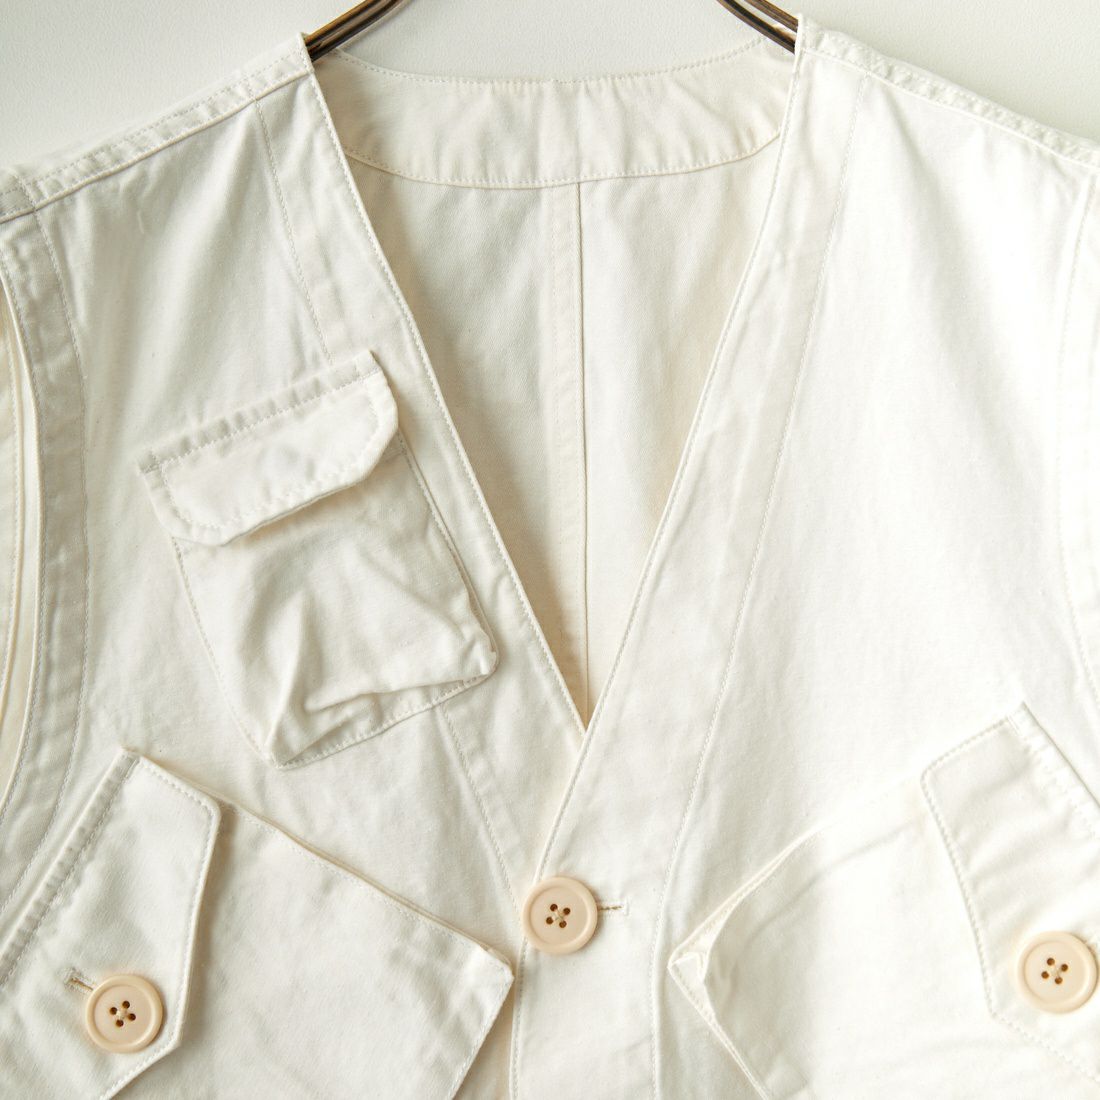 Jeans Factory Clothes [ジーンズファクトリークローズ] C-1ベスト [JFC-231-039] WHITE